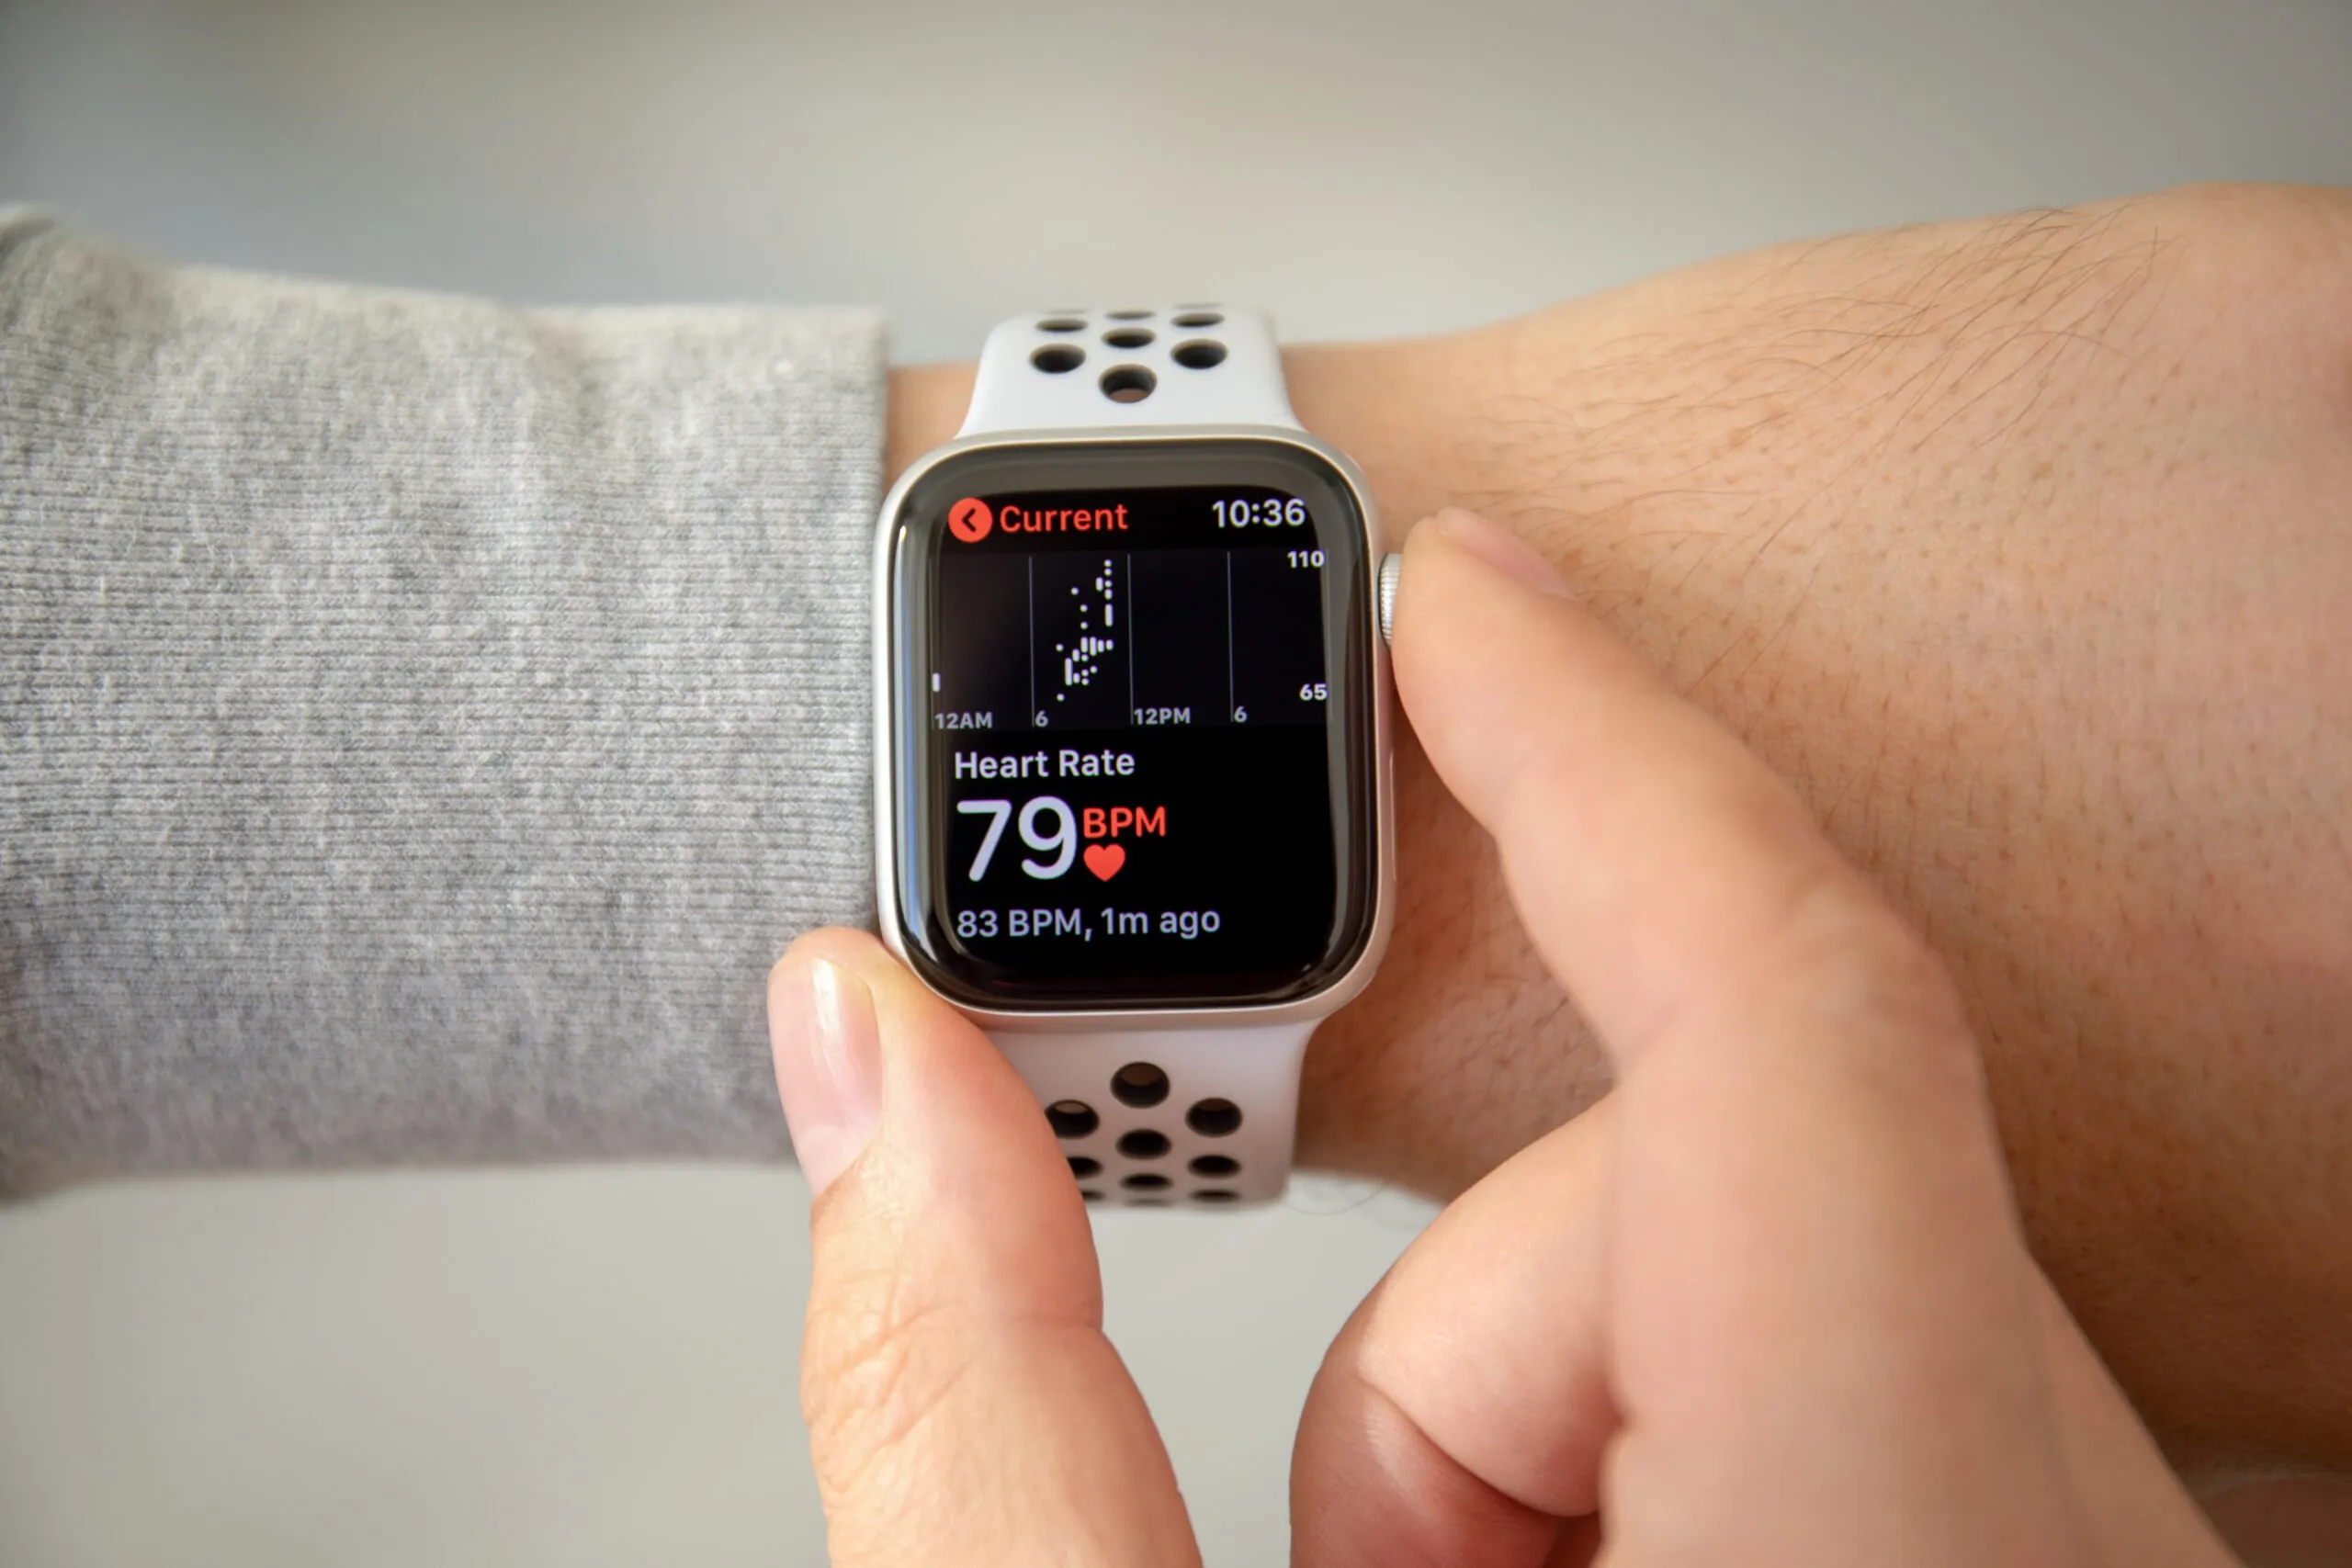 Apple Watch Series 4, released in 2018. Image: DenPhotos/Shutterstock